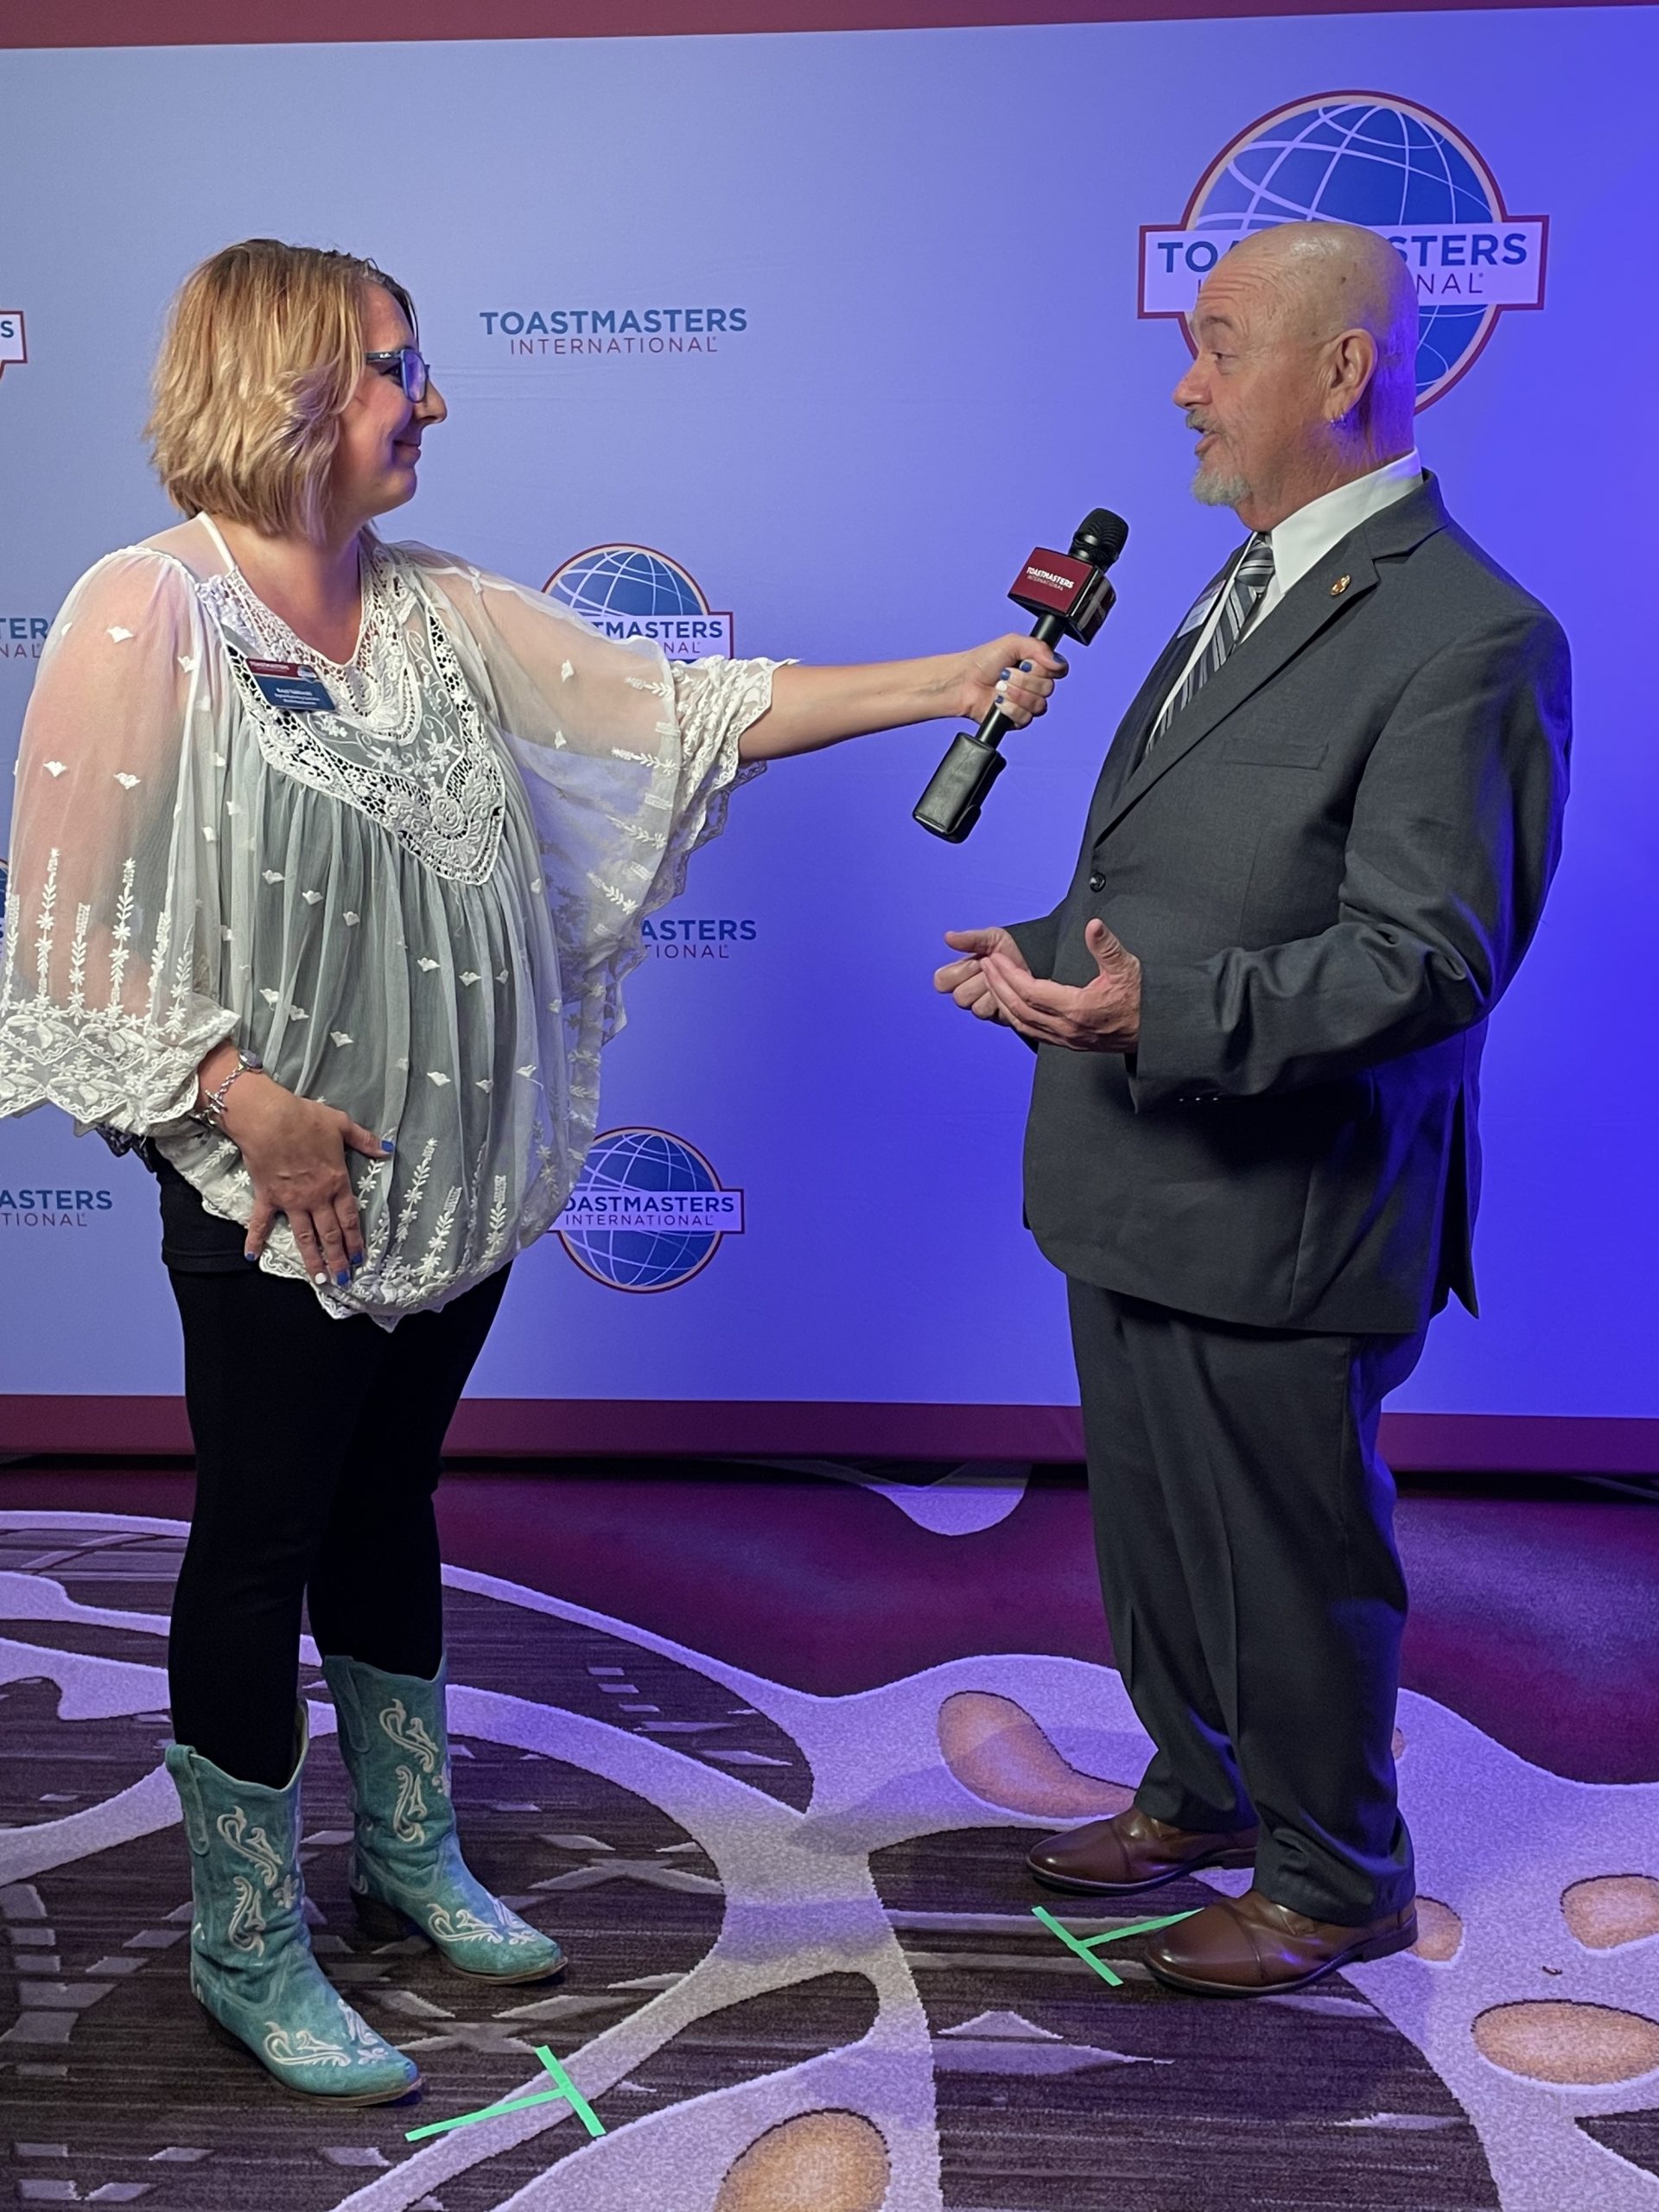 Kristi Yablonski interviews John J. Hogan, D53 Distict Director, in Nashville during the International Convention, 19 August 2022